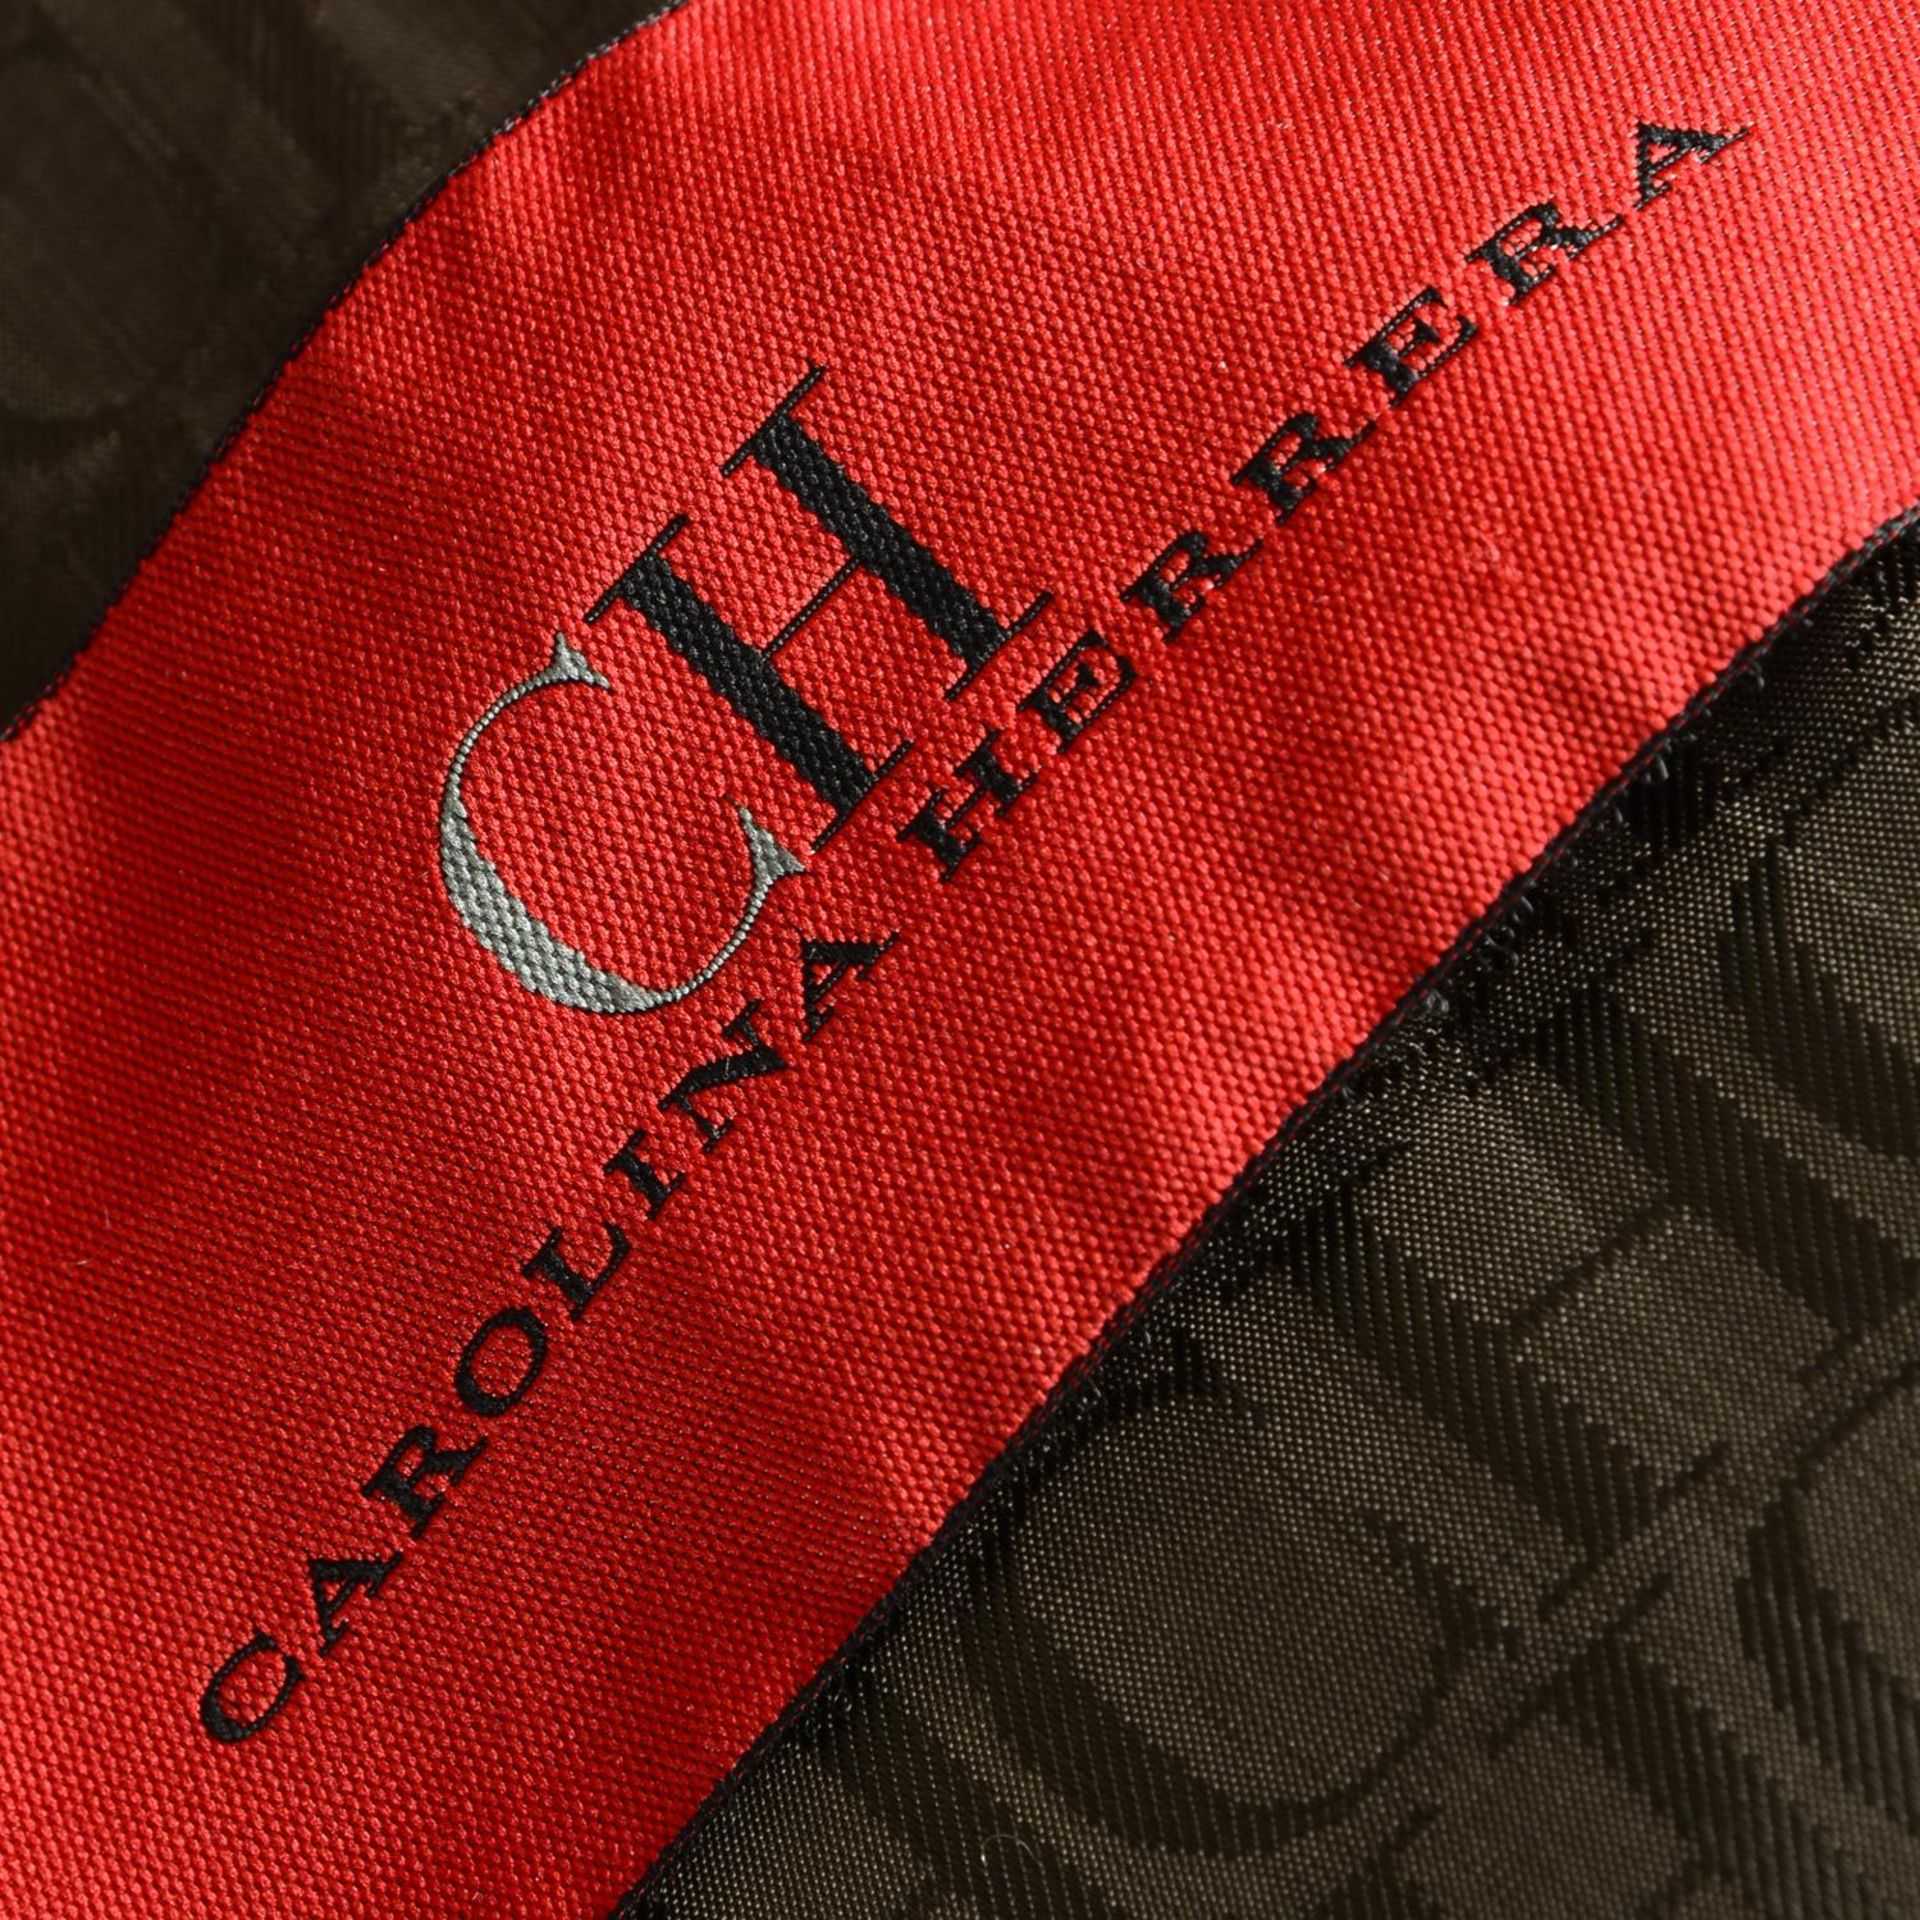 CAROLINA HERRERA - a coat and two jackets. - Image 5 of 6